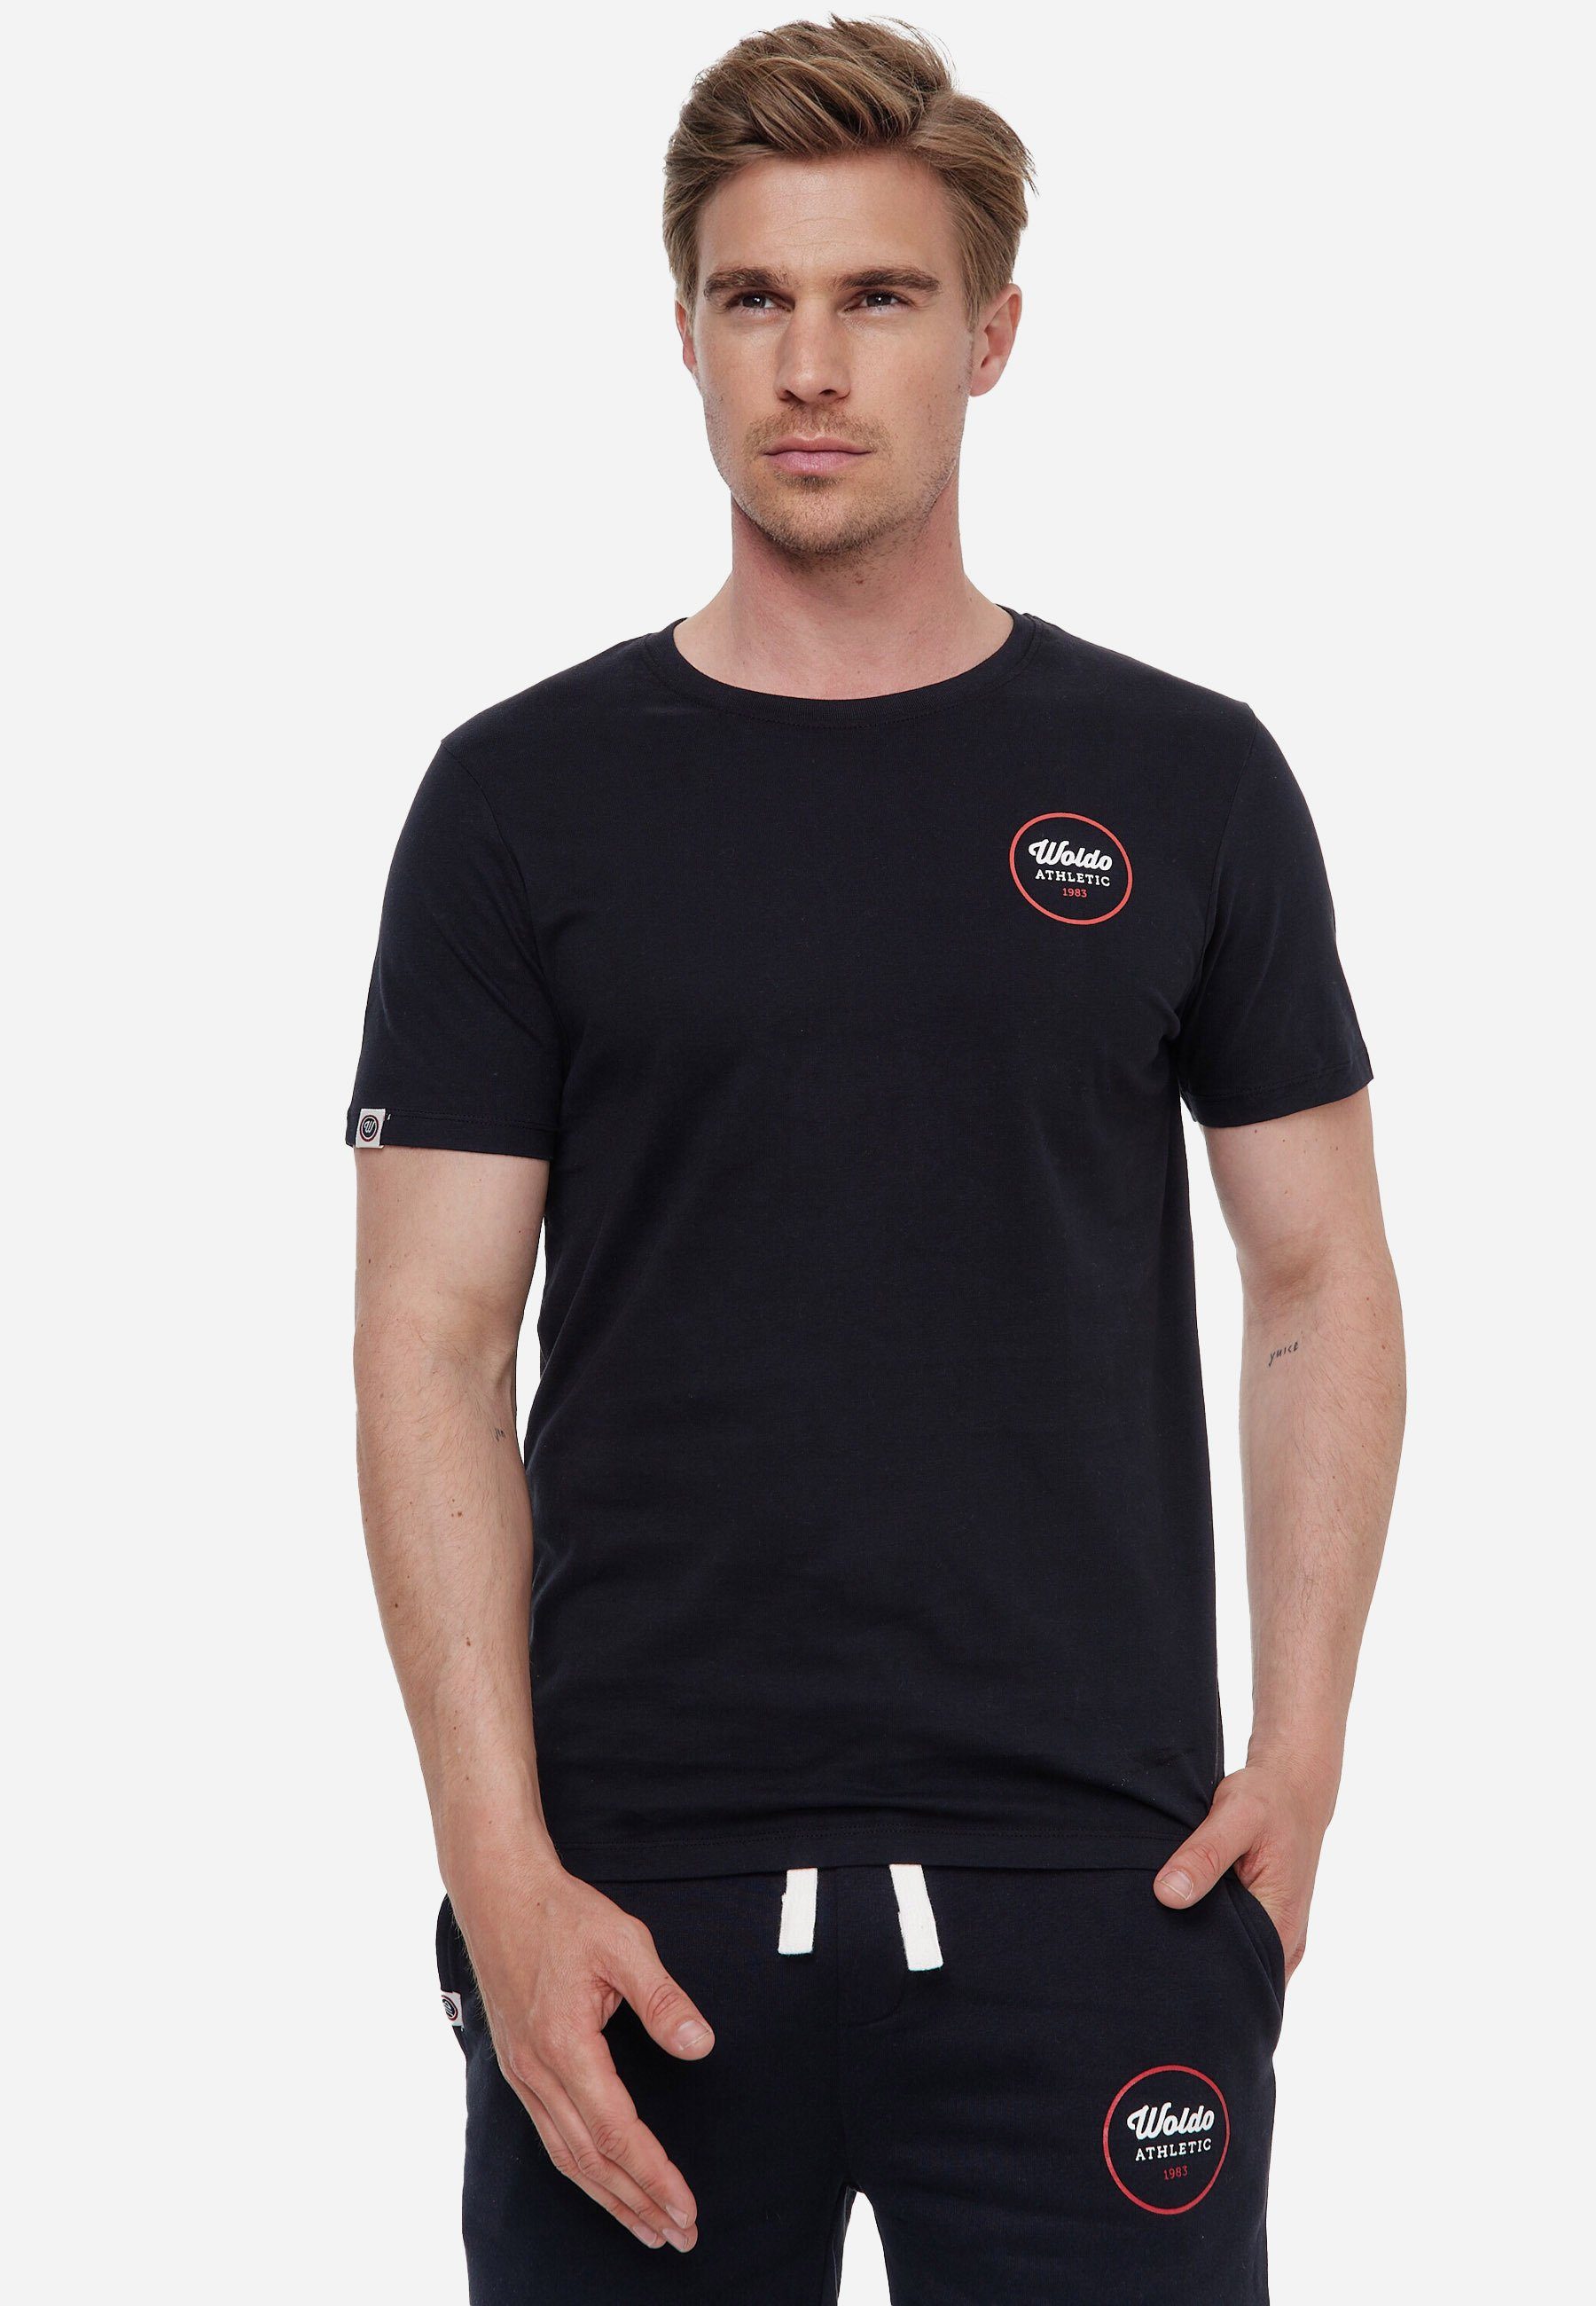 Woldo Athletic T-Shirt T-Shirt Print Runder schwarz-rot